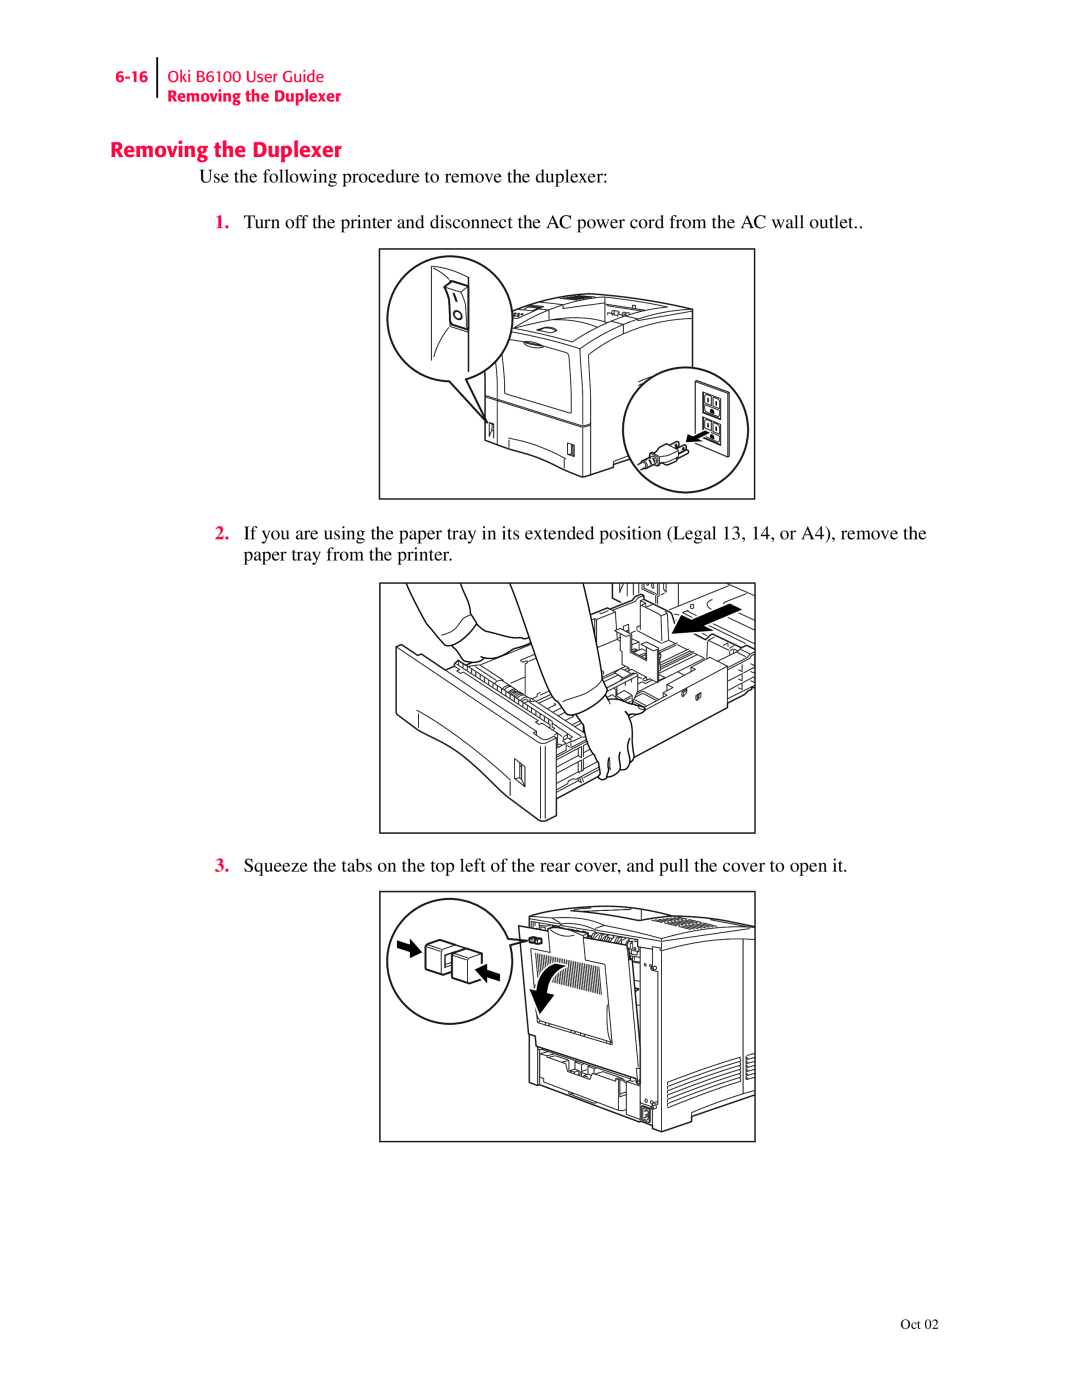 Oki manual Oki B6100 User Guide Removing the Duplexer 